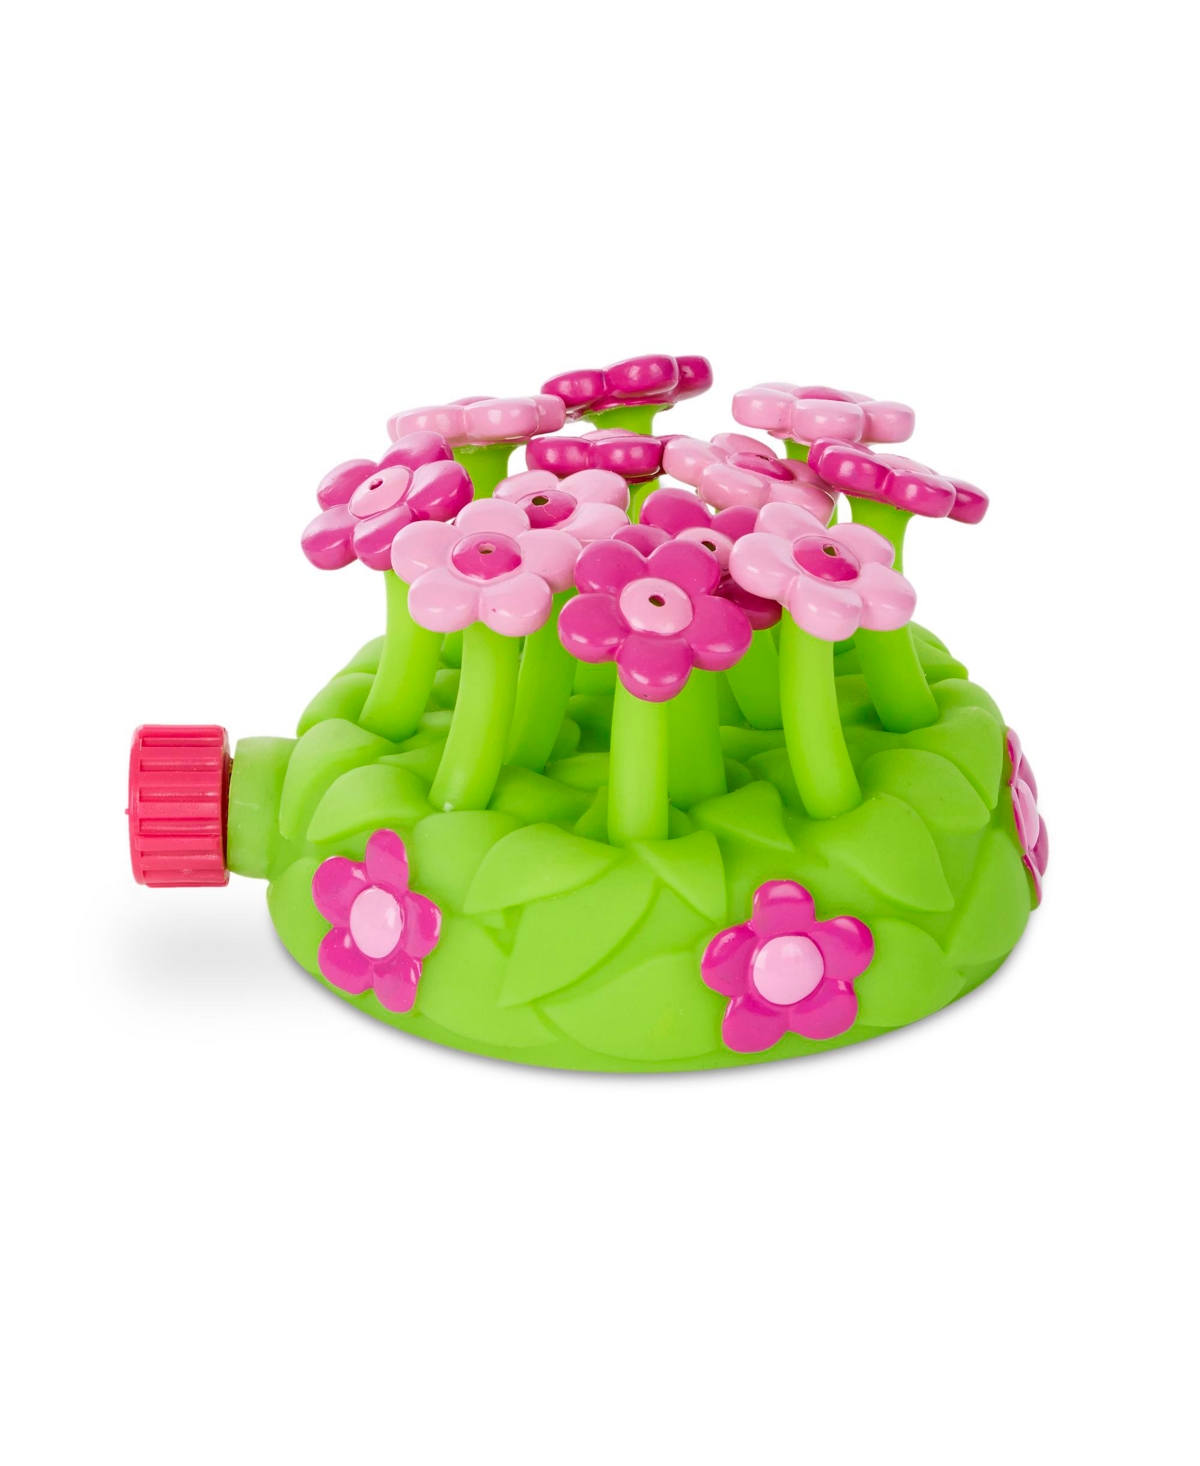 Melissa & Doug Sunny Patch Pretty Petals Flower Sprinkler Toy With Hose Attachment - Pretty Petals